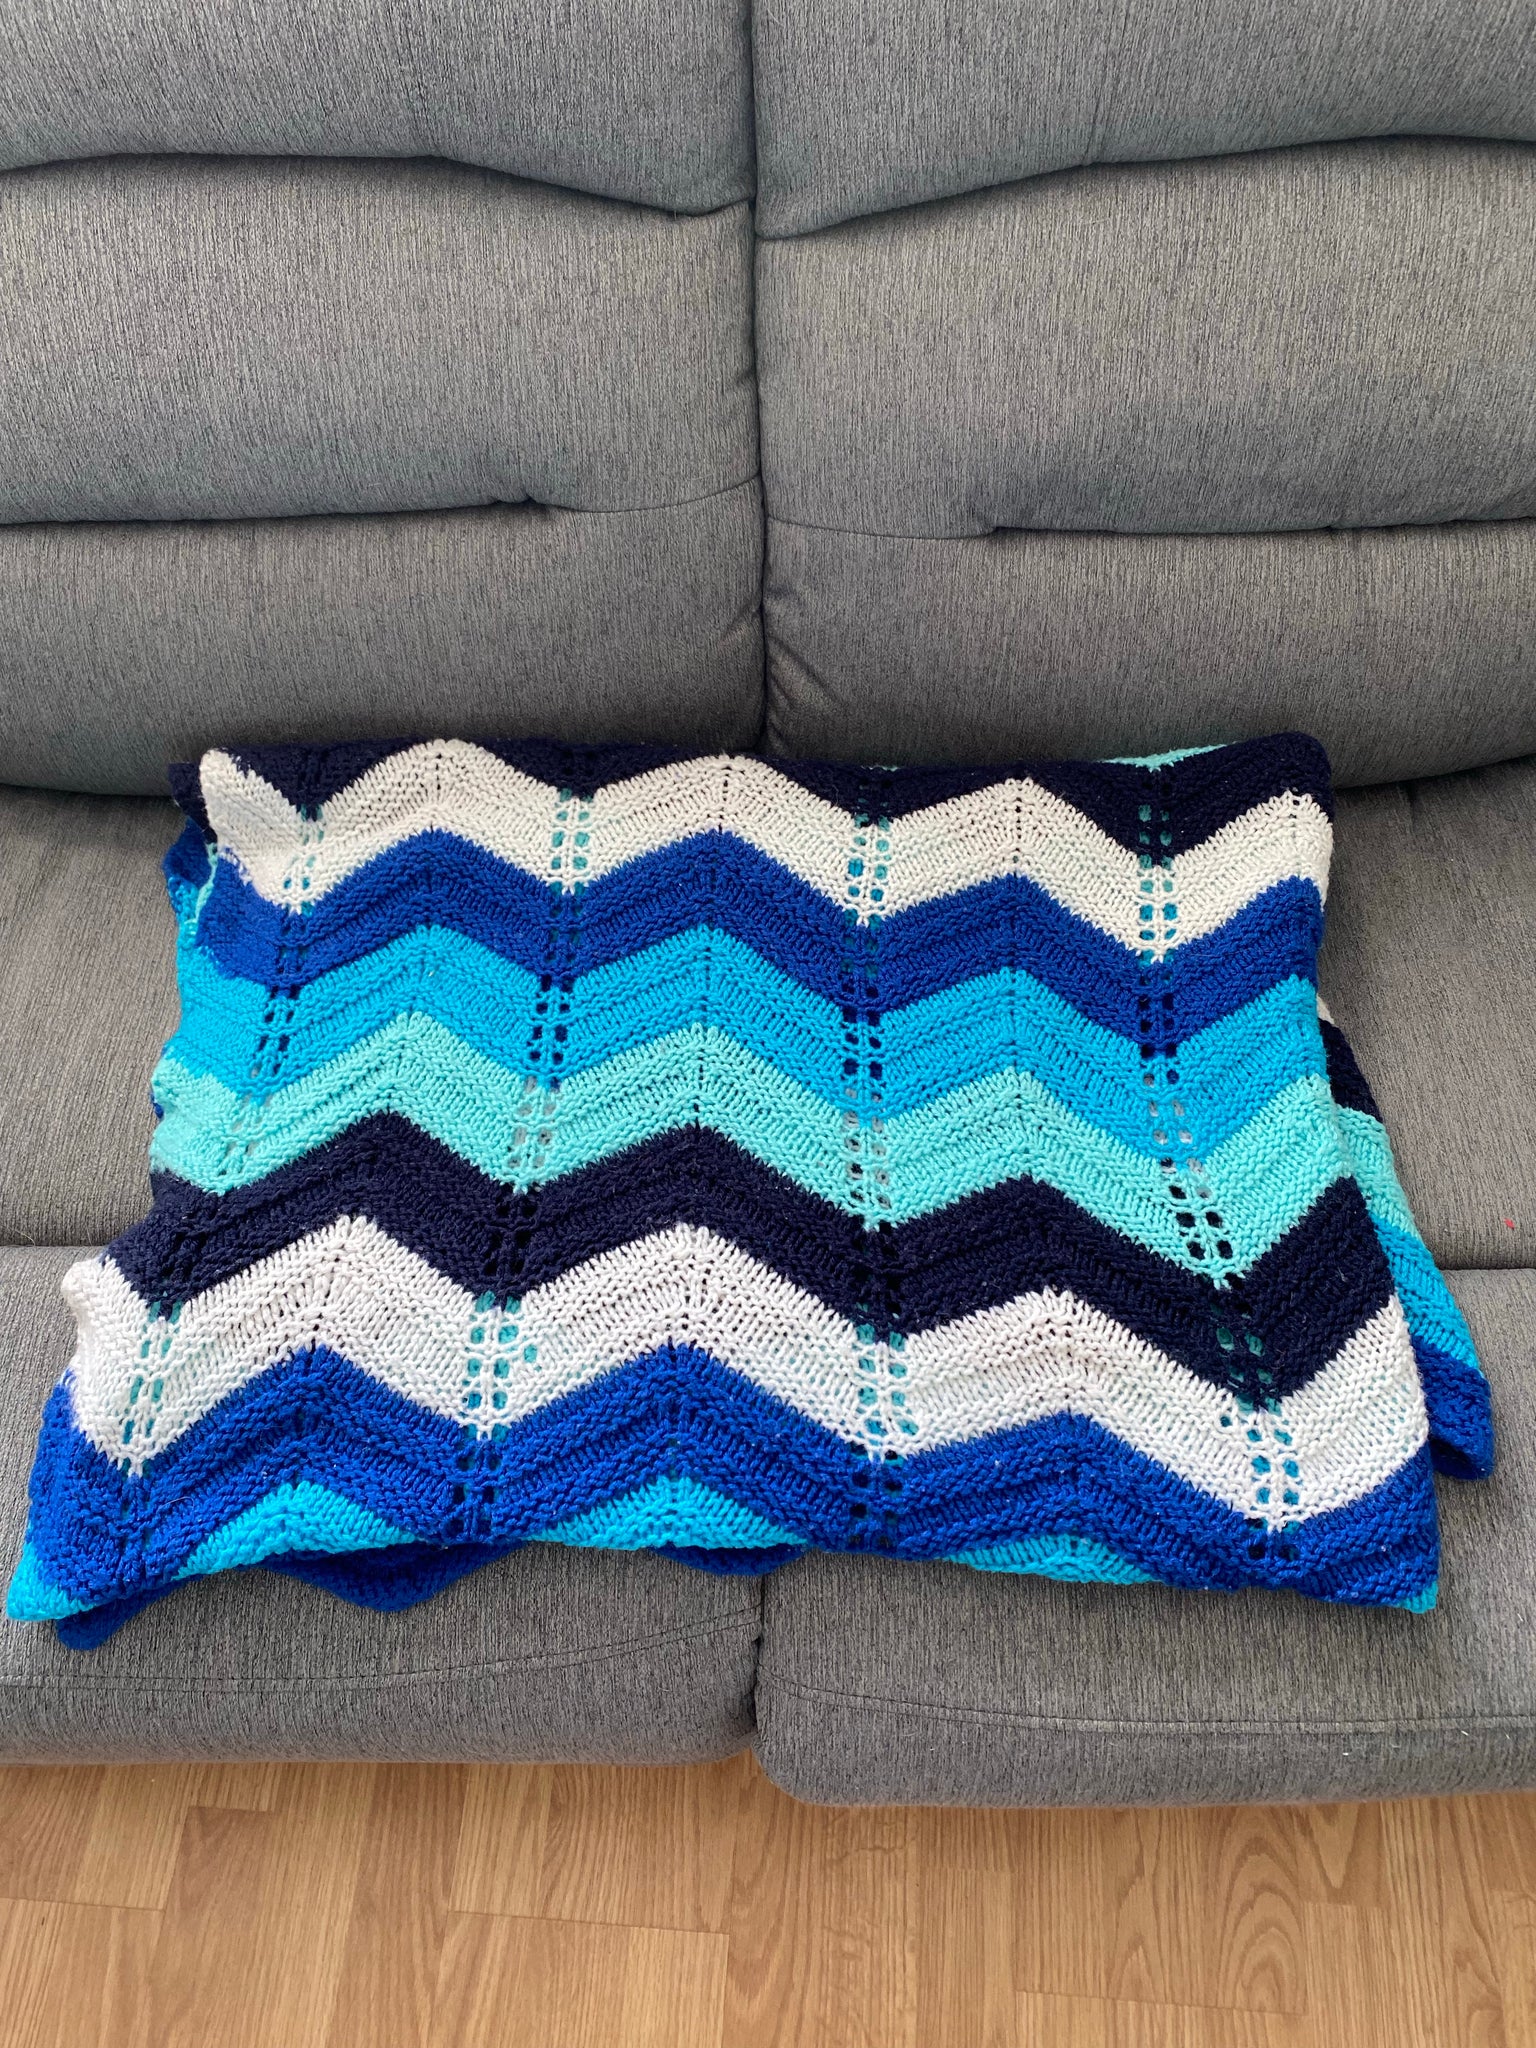 Chevron blues vintage knitted blanket